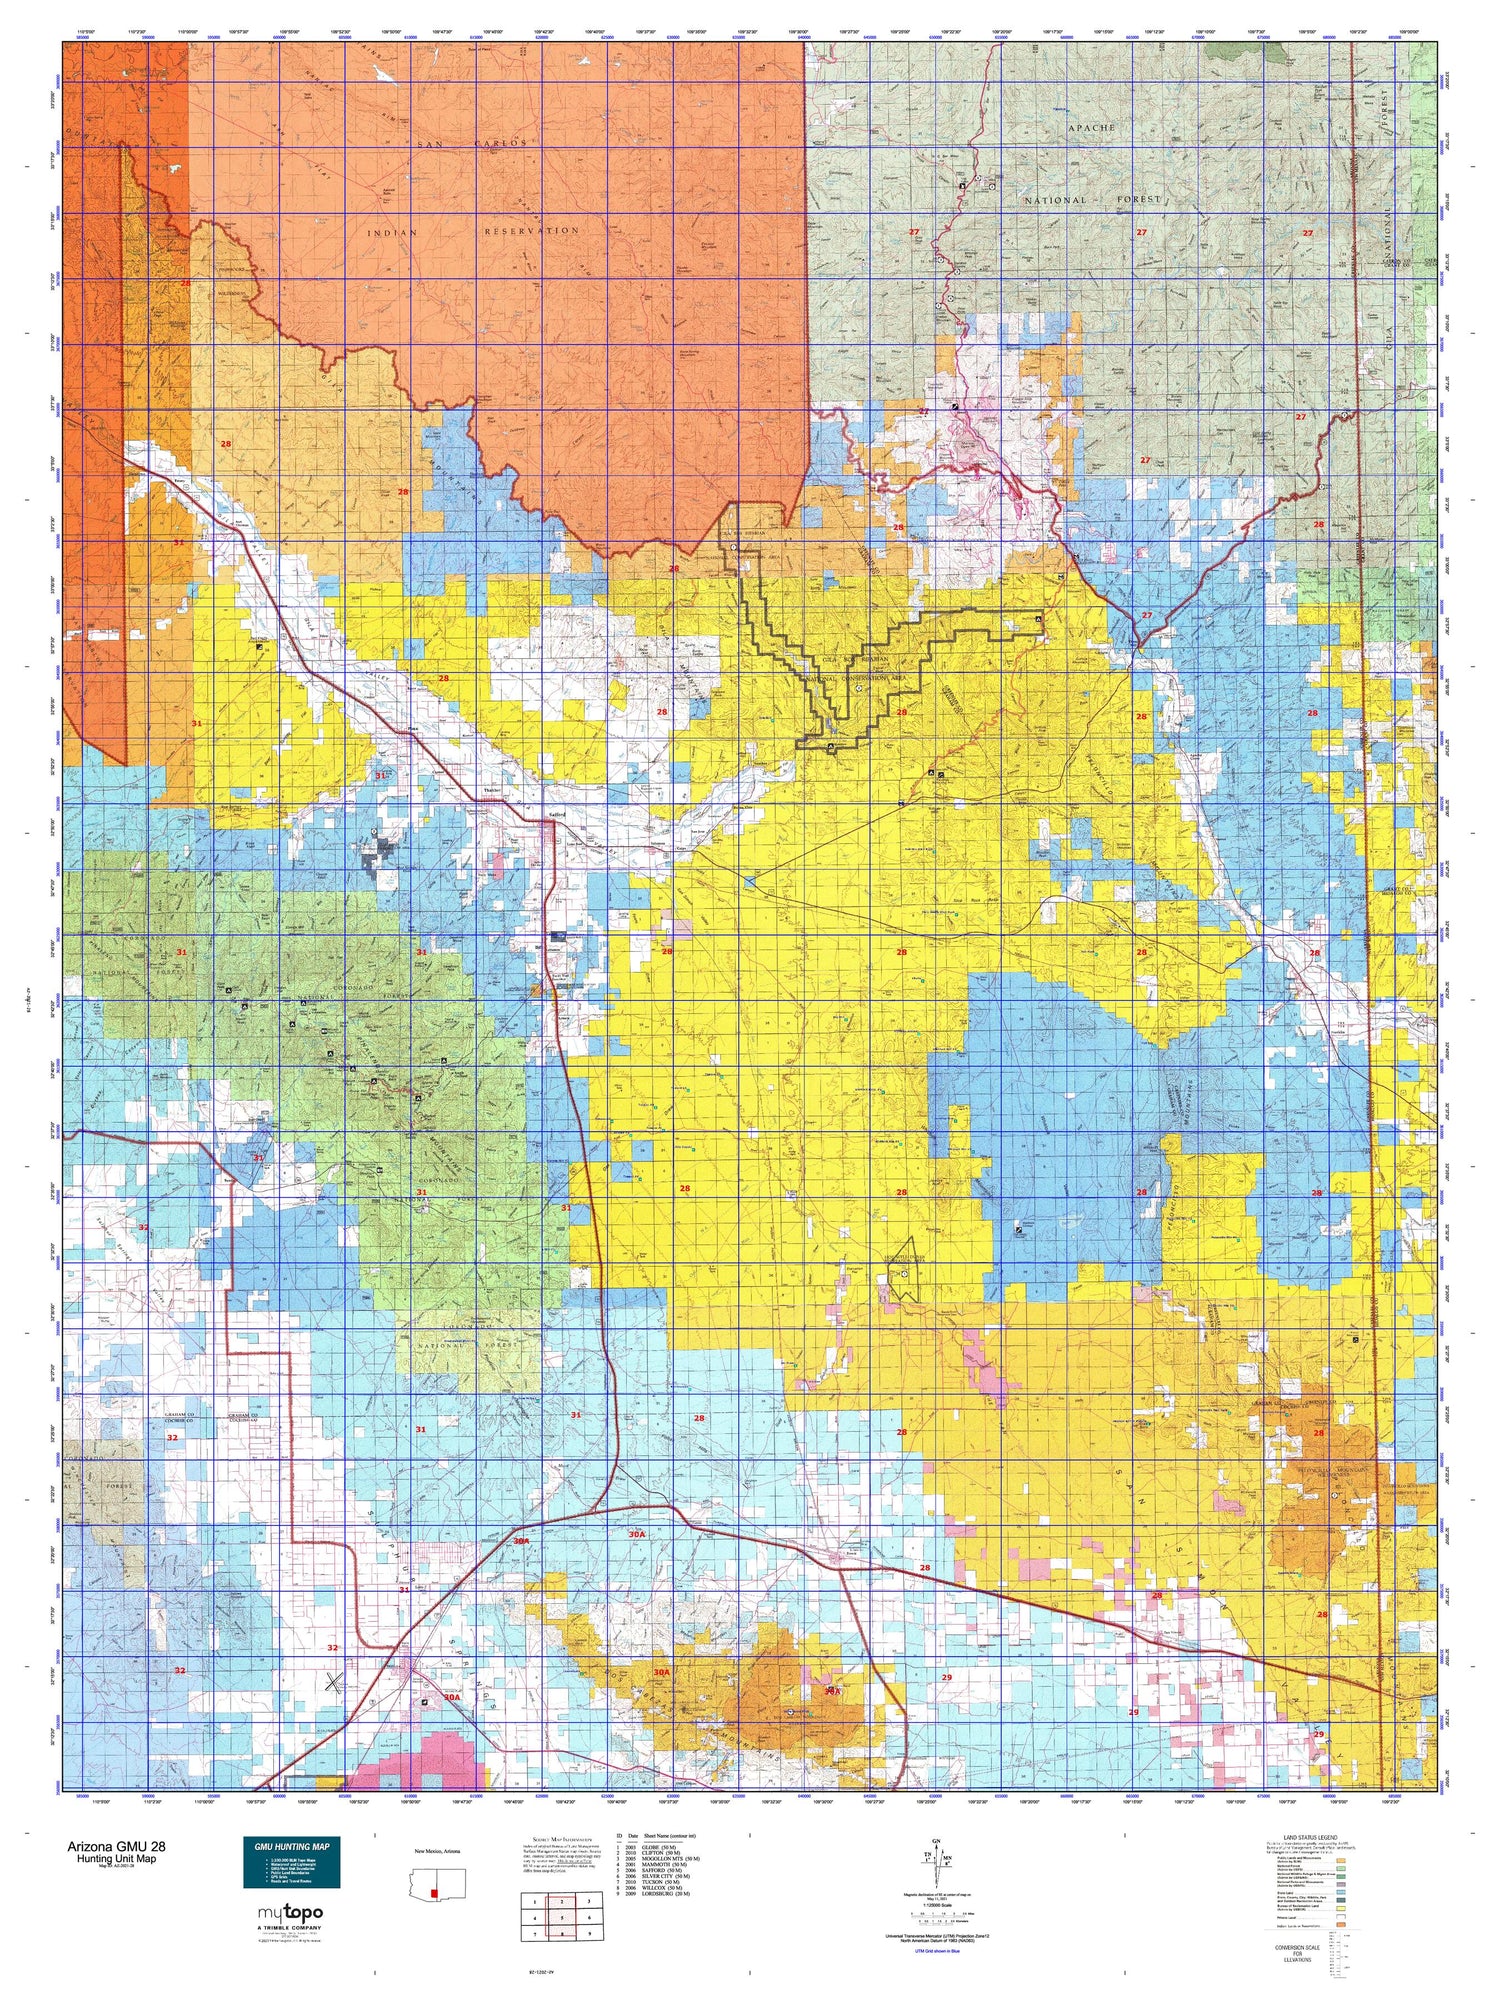 Arizona GMU 28 Map Image